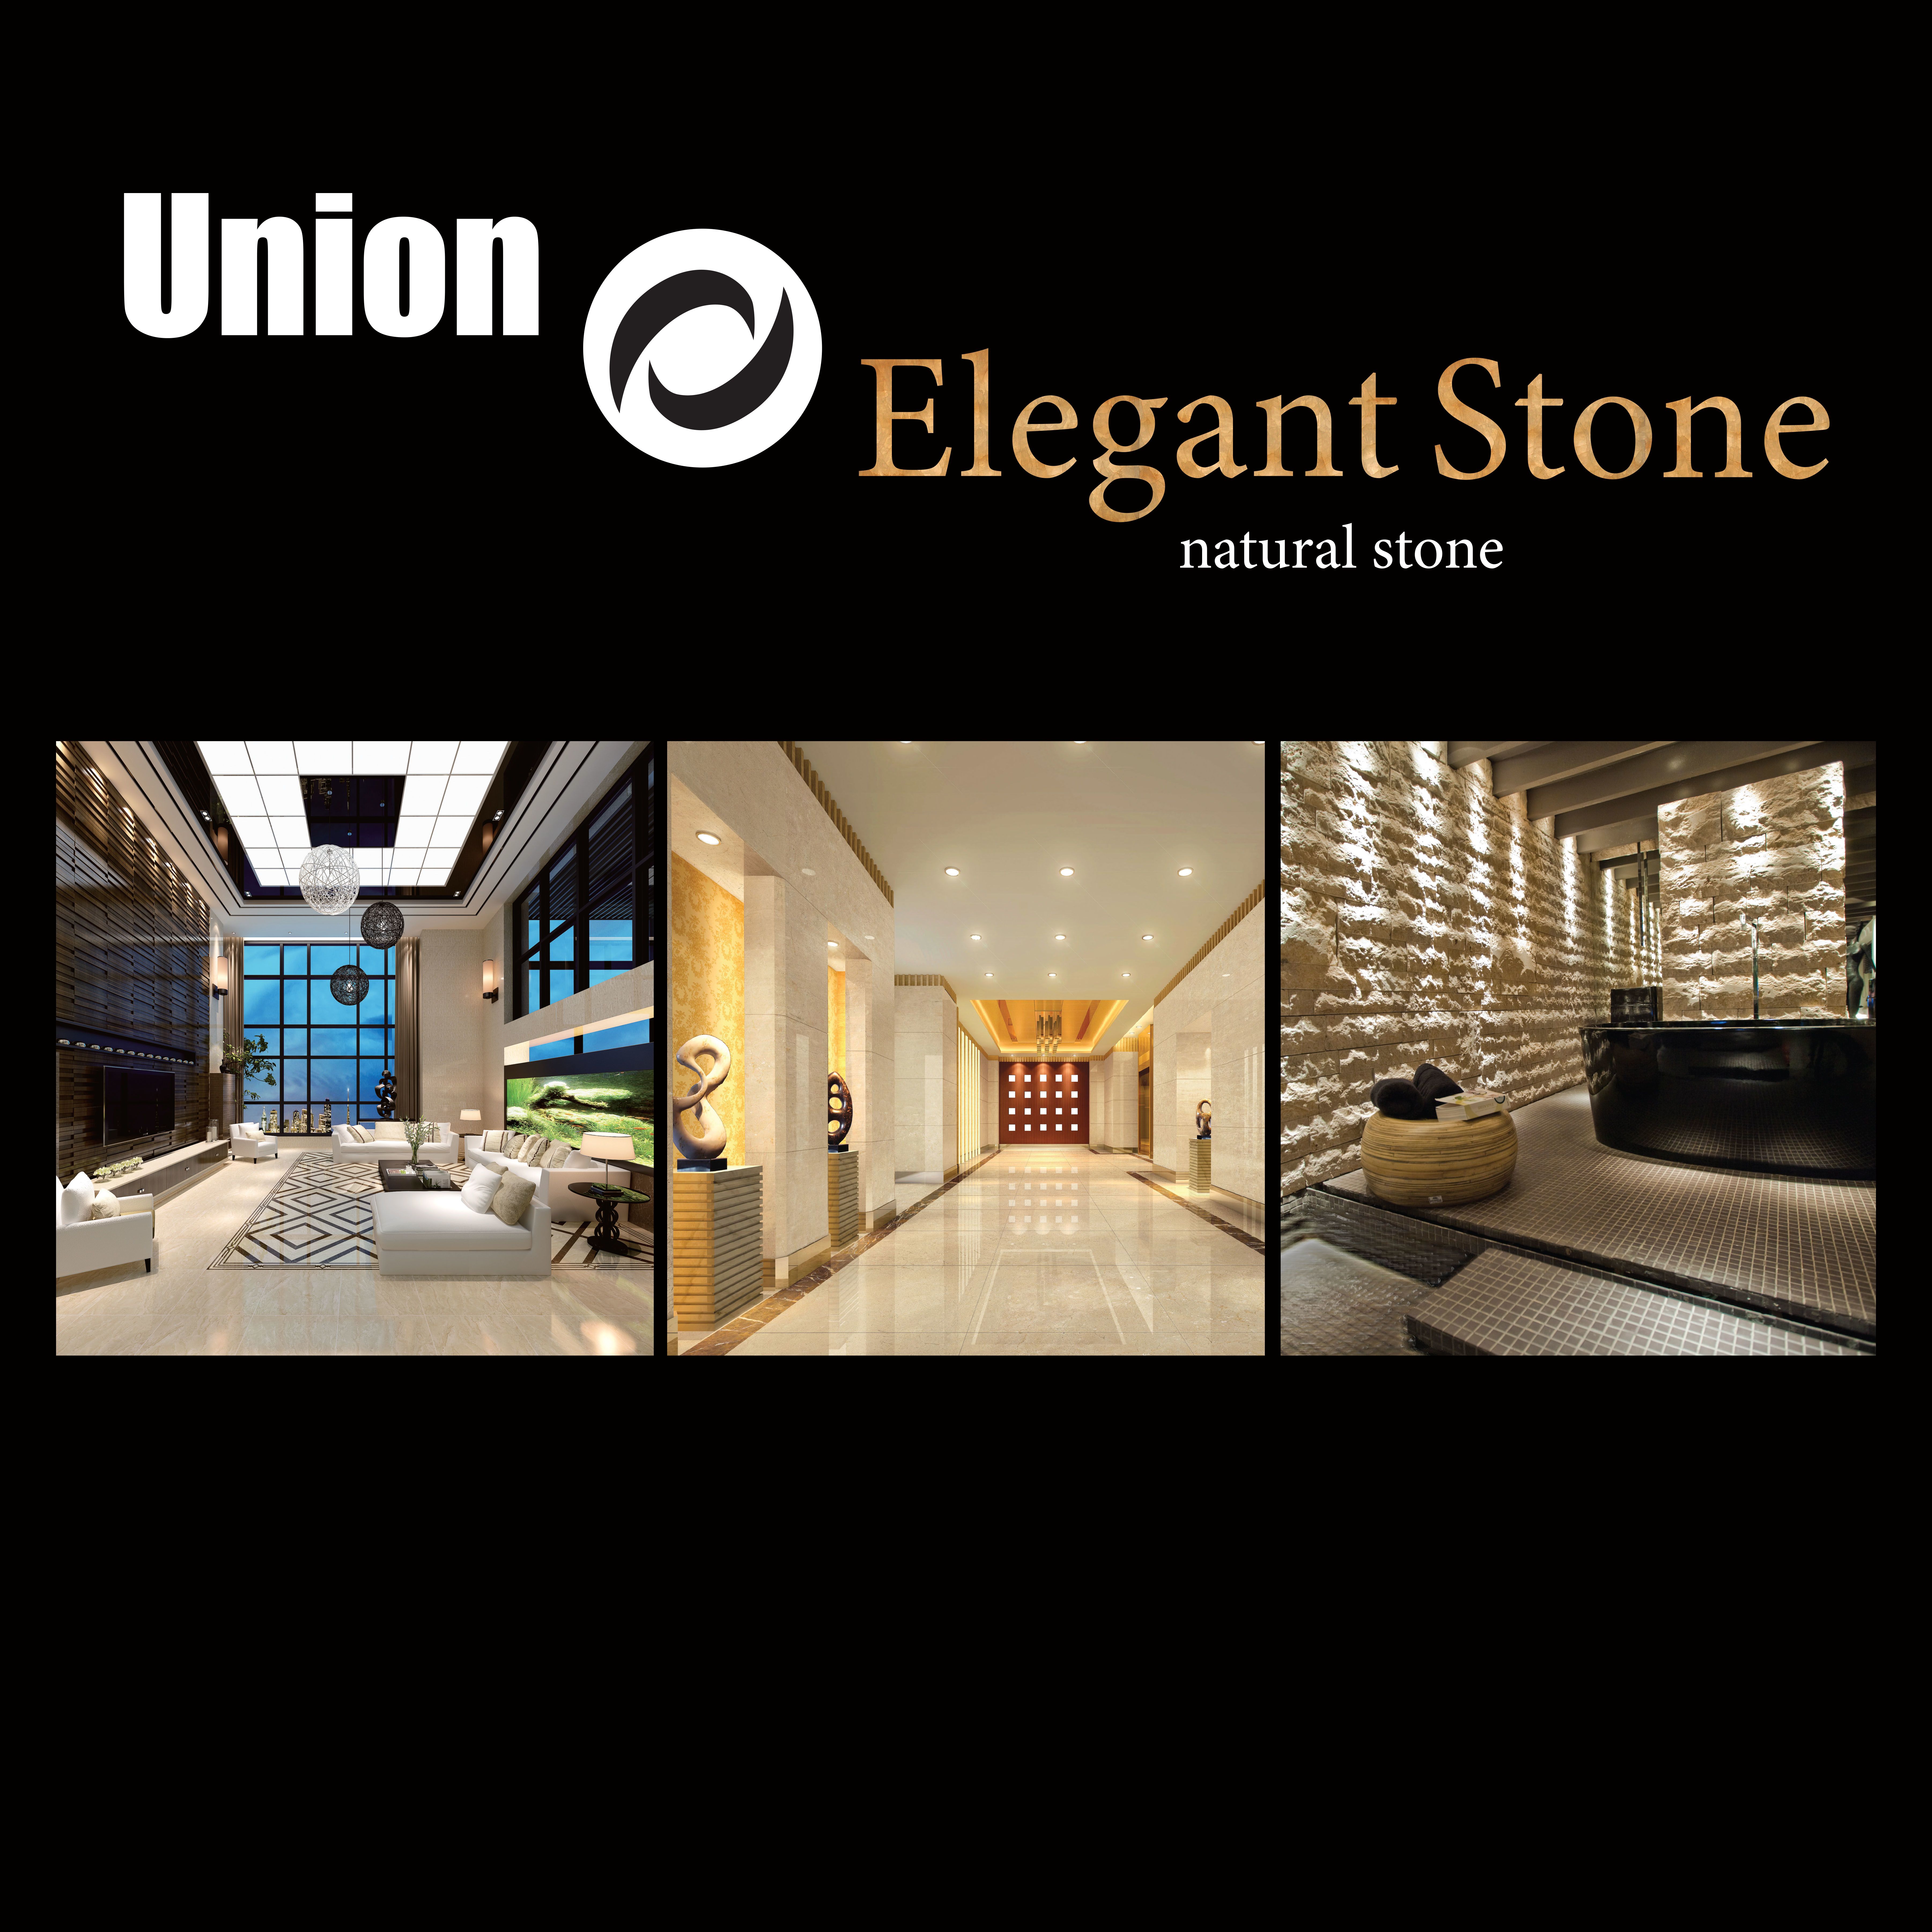 Union Elegant Stone